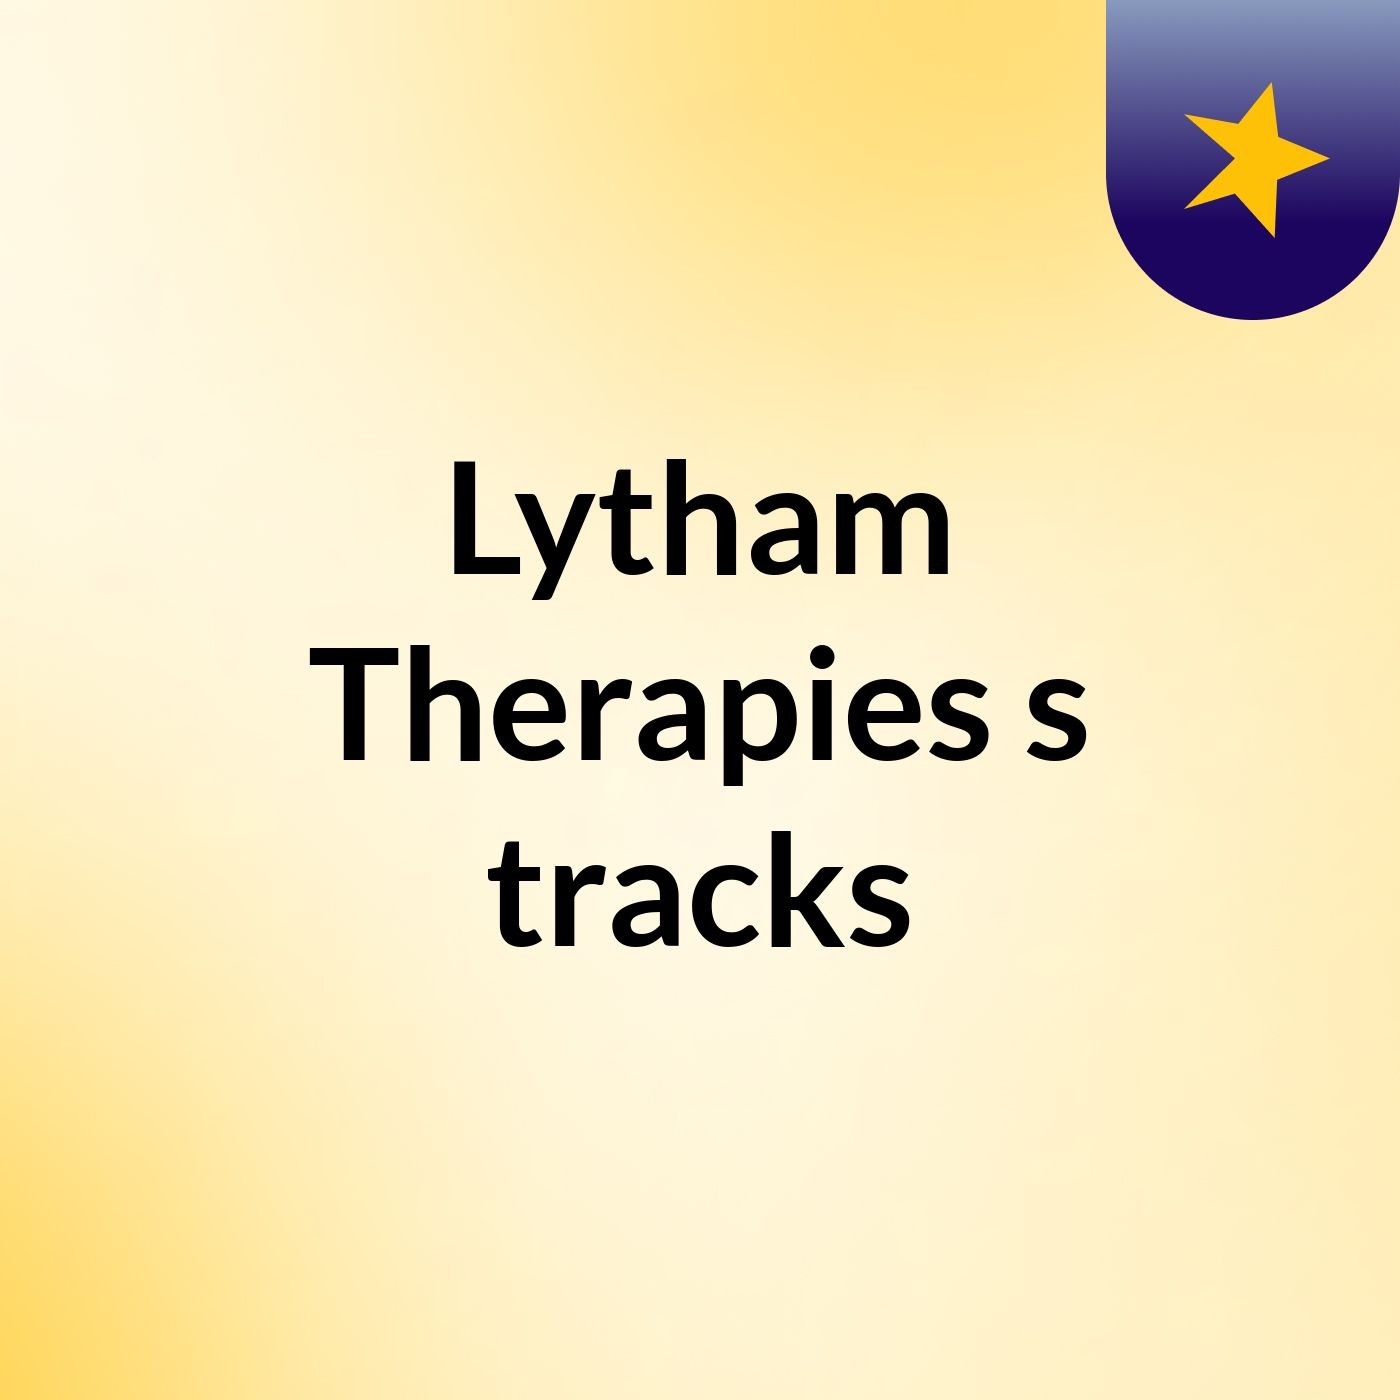 Lytham Therapies's tracks